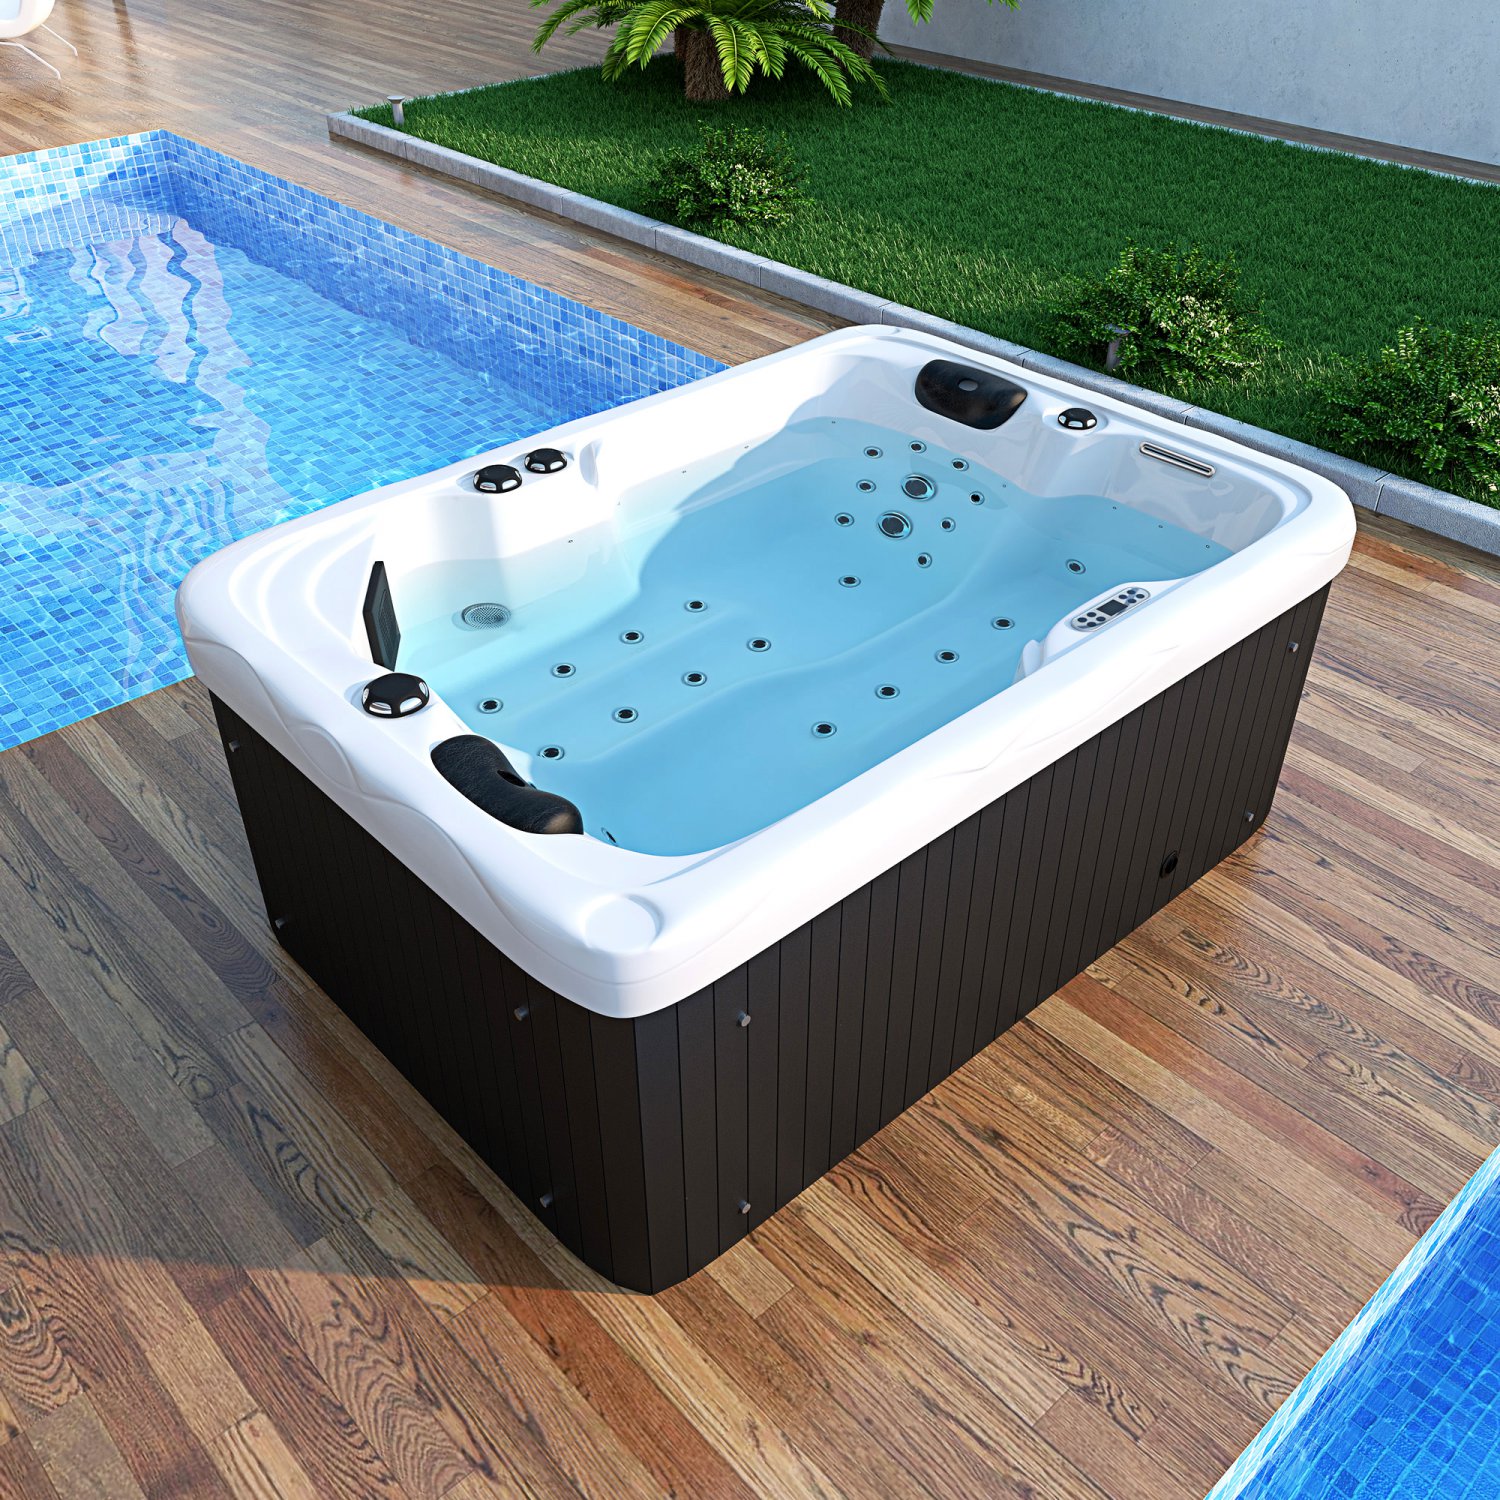 Spa Bath Dimensions Australia - Best Design Idea